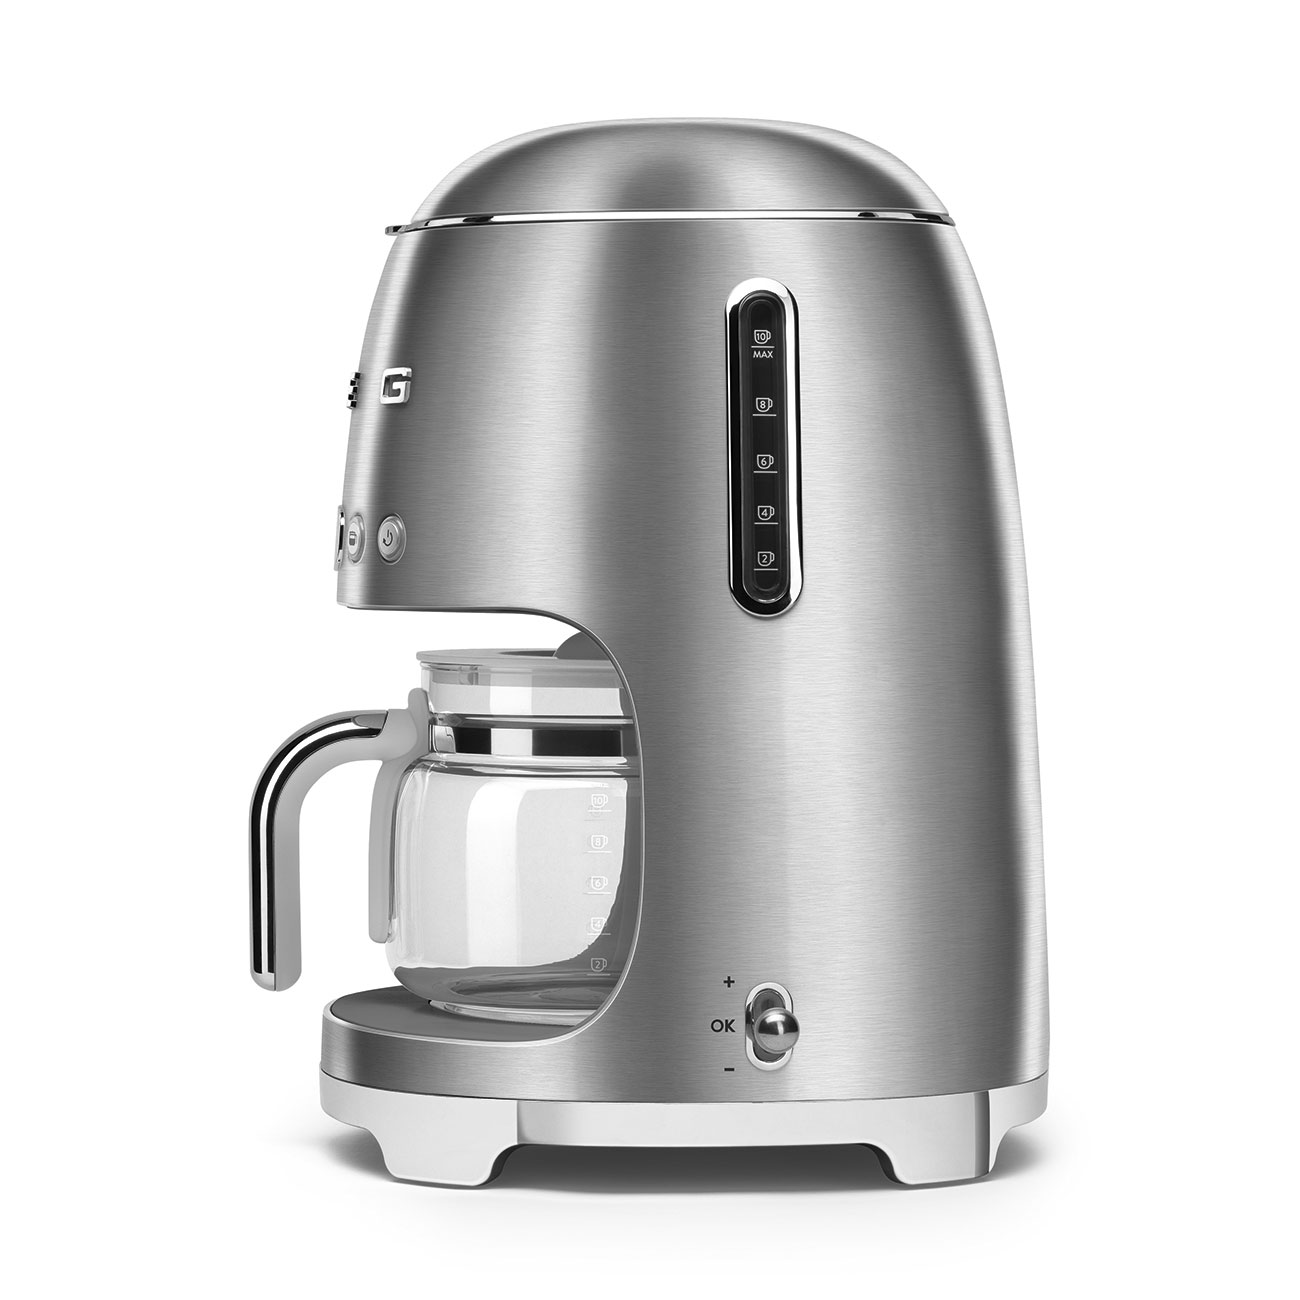 Stainless steel Drip Filter Coffee Machine - DCF02SSUK - Smeg_2